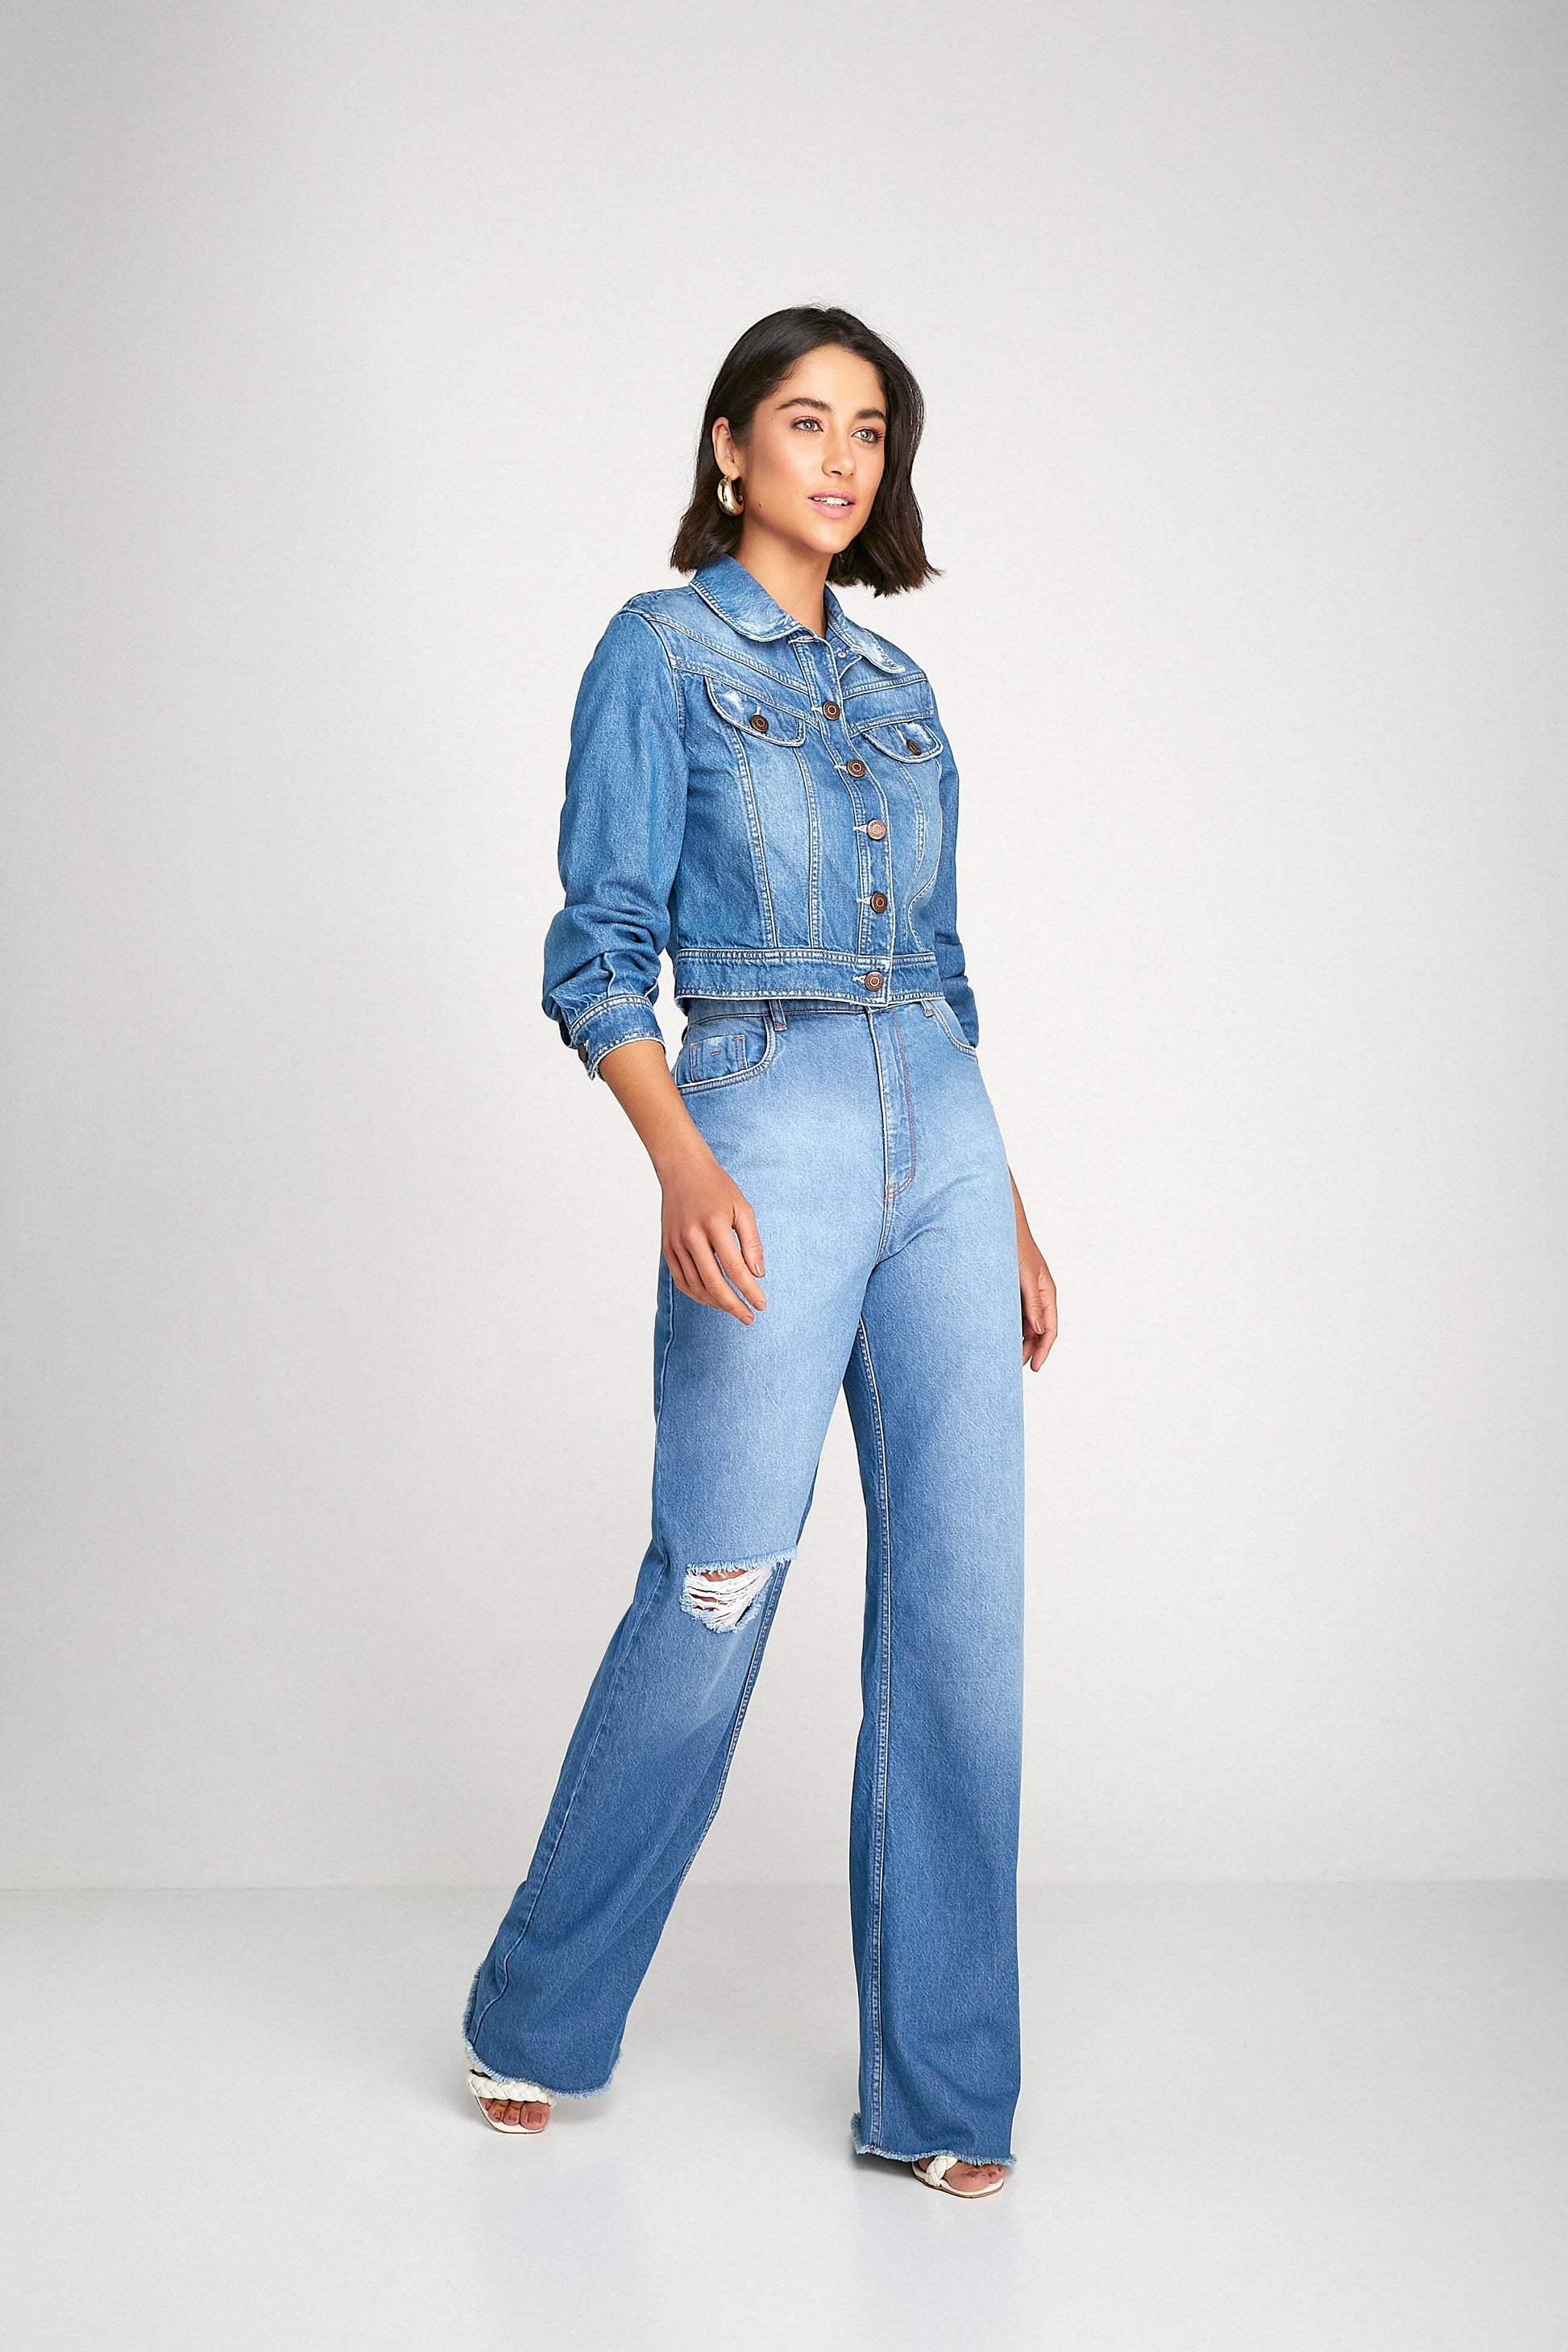 jaqueta jeans cropped com recortes – Scalon